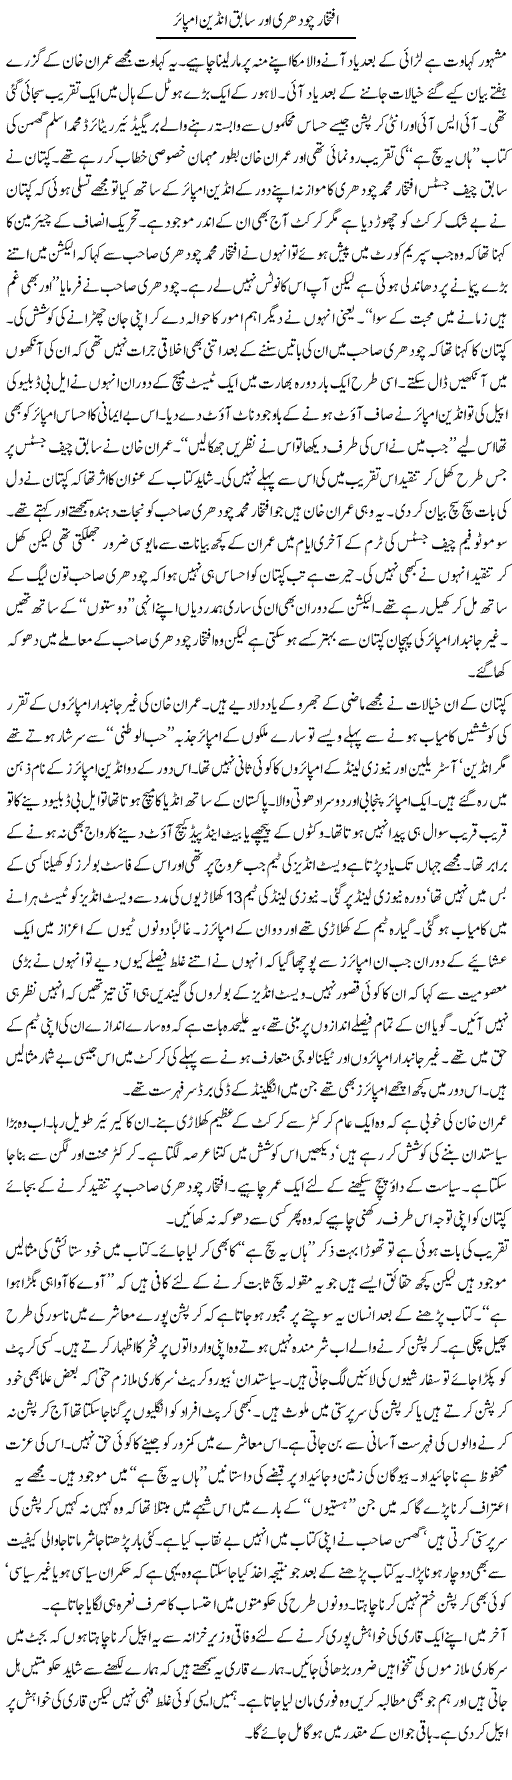 Iftekhar Choudhry Our Sabiq Indian Umpire | Ayaz Khan | Daily Urdu Columns